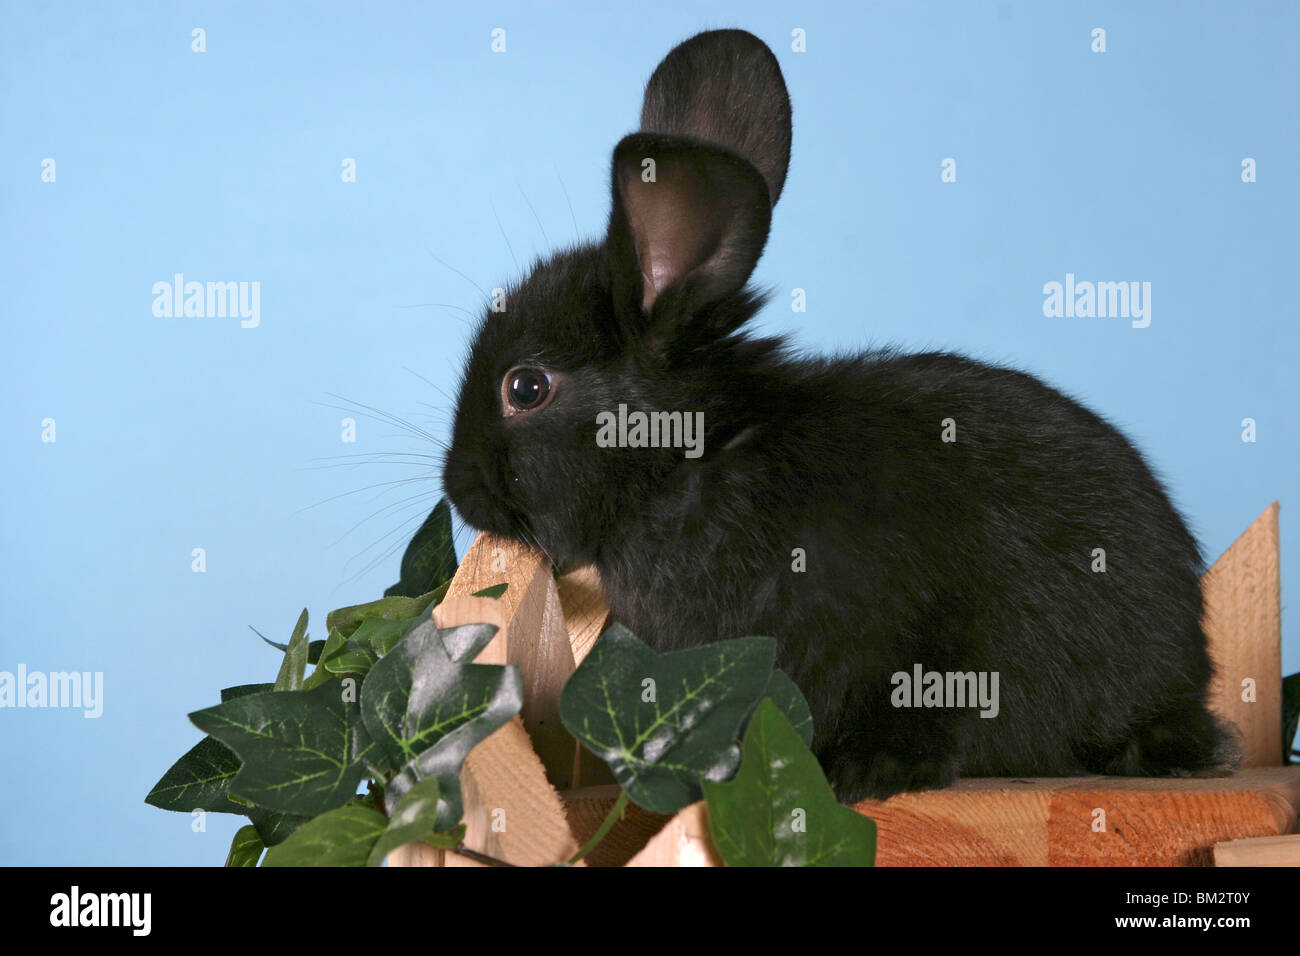 Kaninchen / rabbit Stock Photo